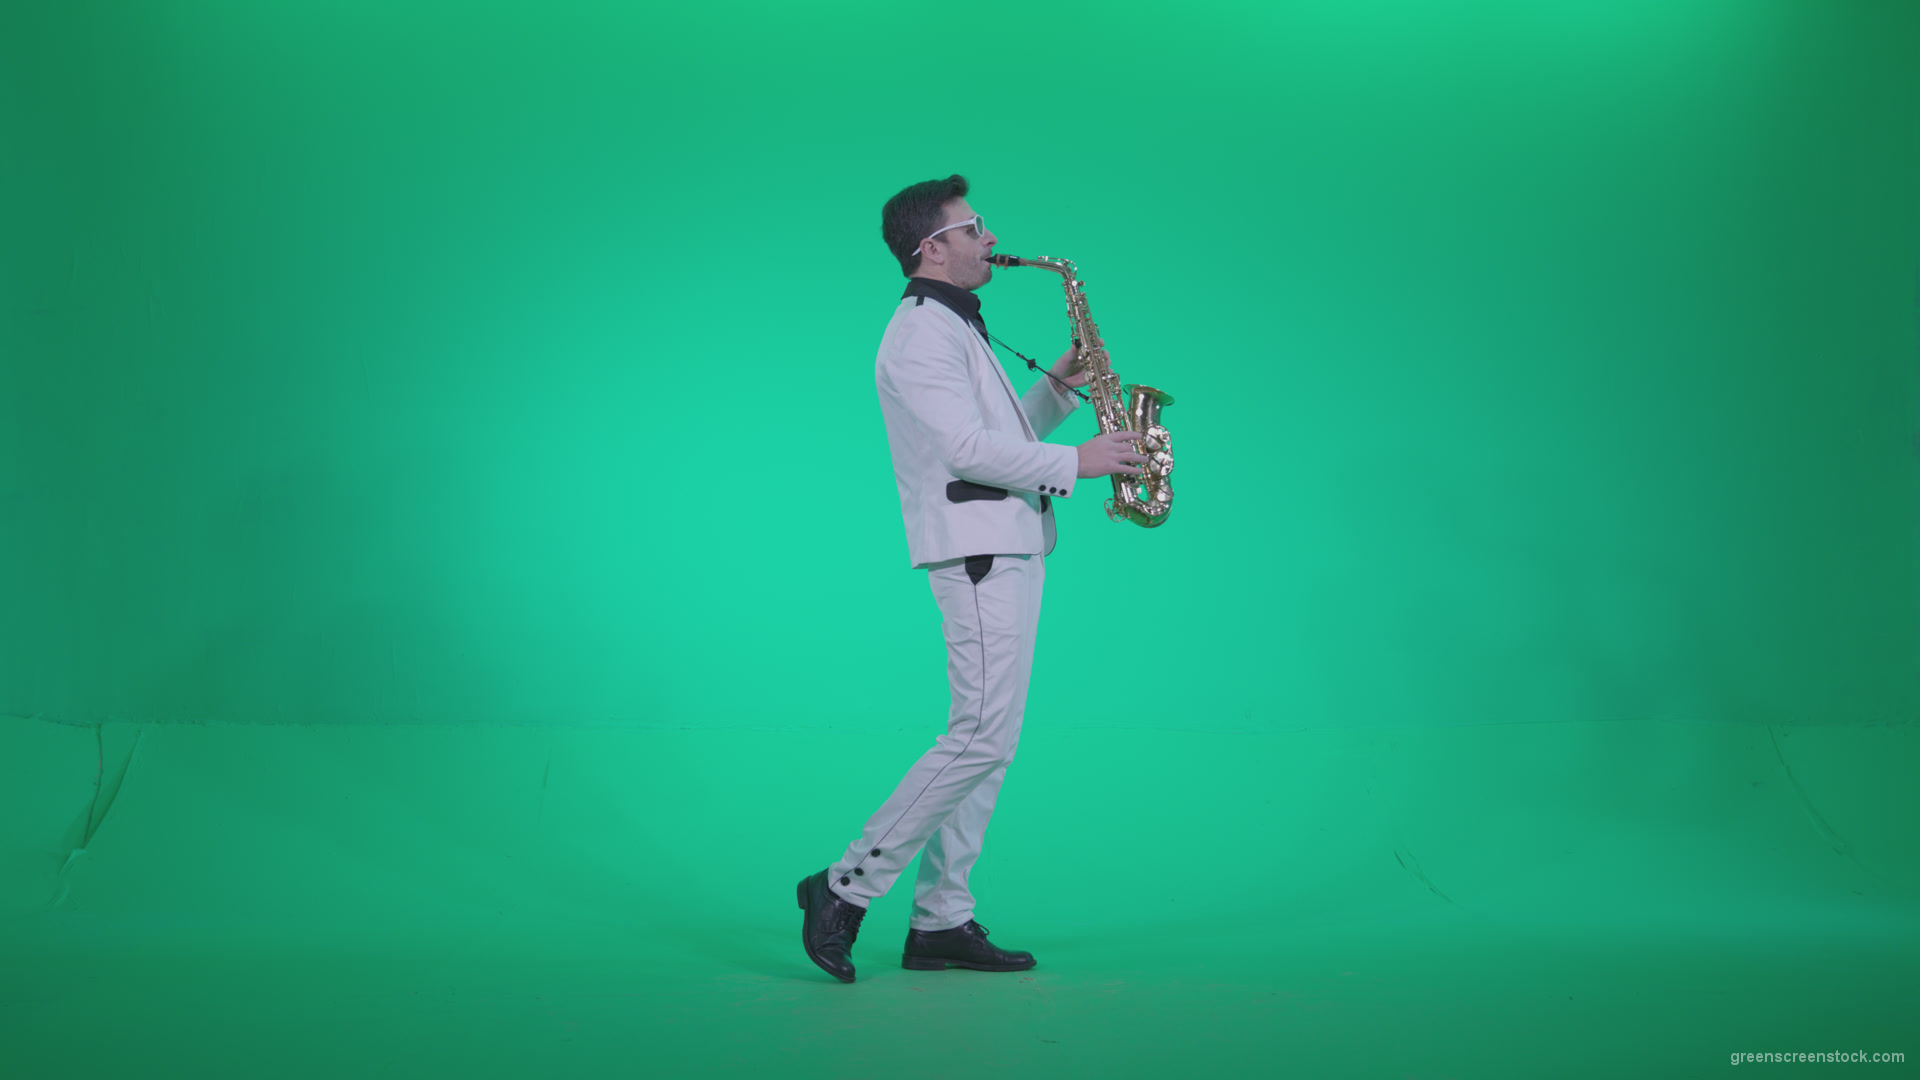 Saxophone-Virtuoso-Performer-s2_001 Green Screen Stock